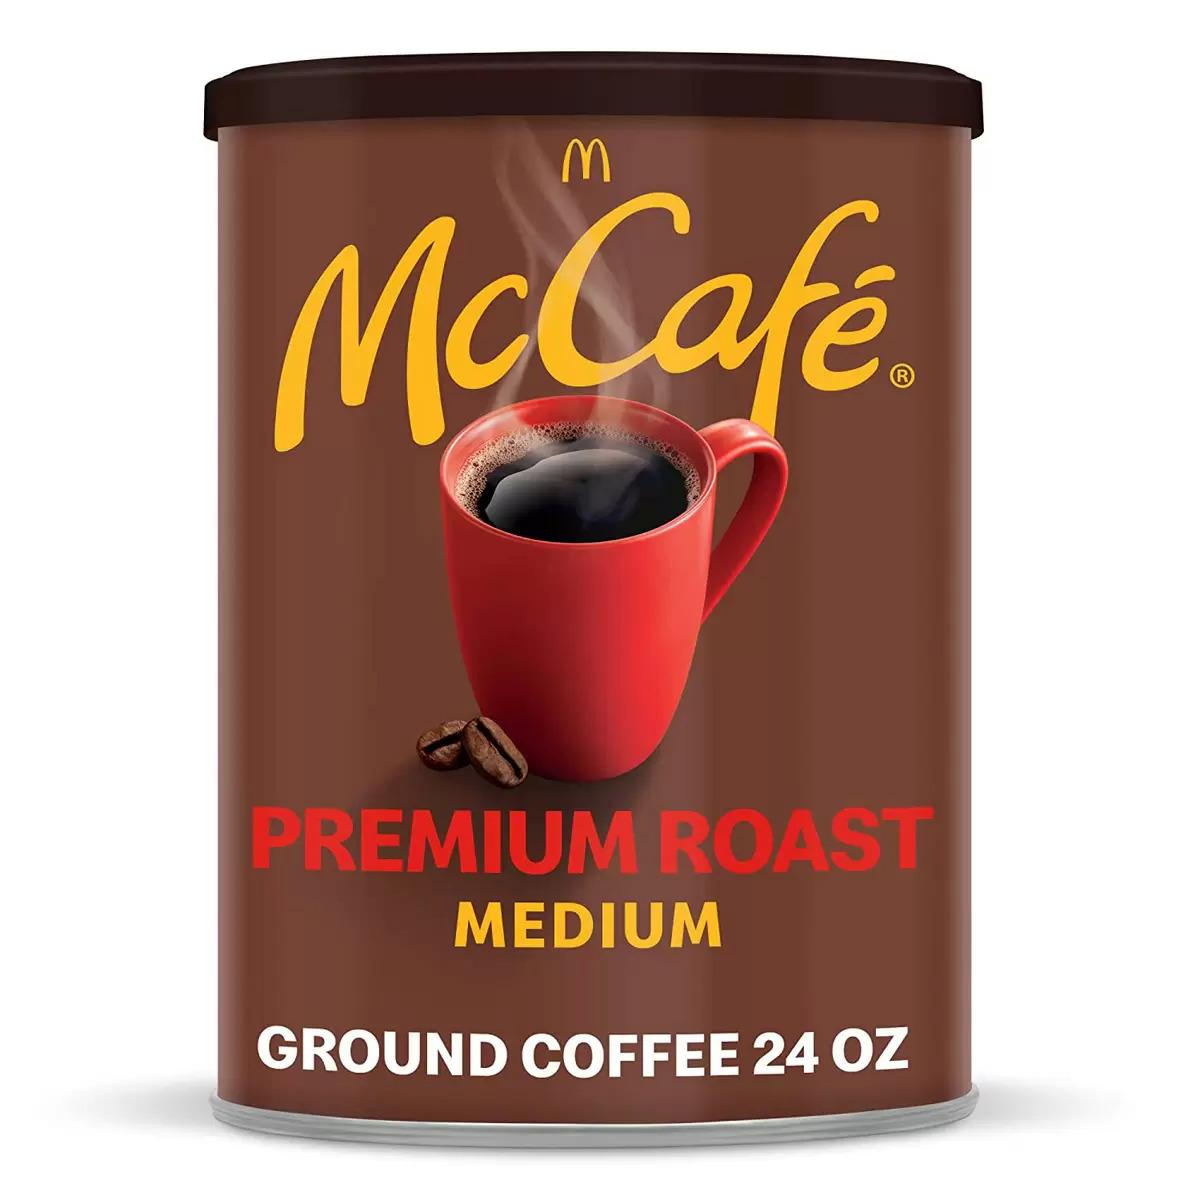 McCafe Premium Roast Ground Coffee for $5.65 Shipped